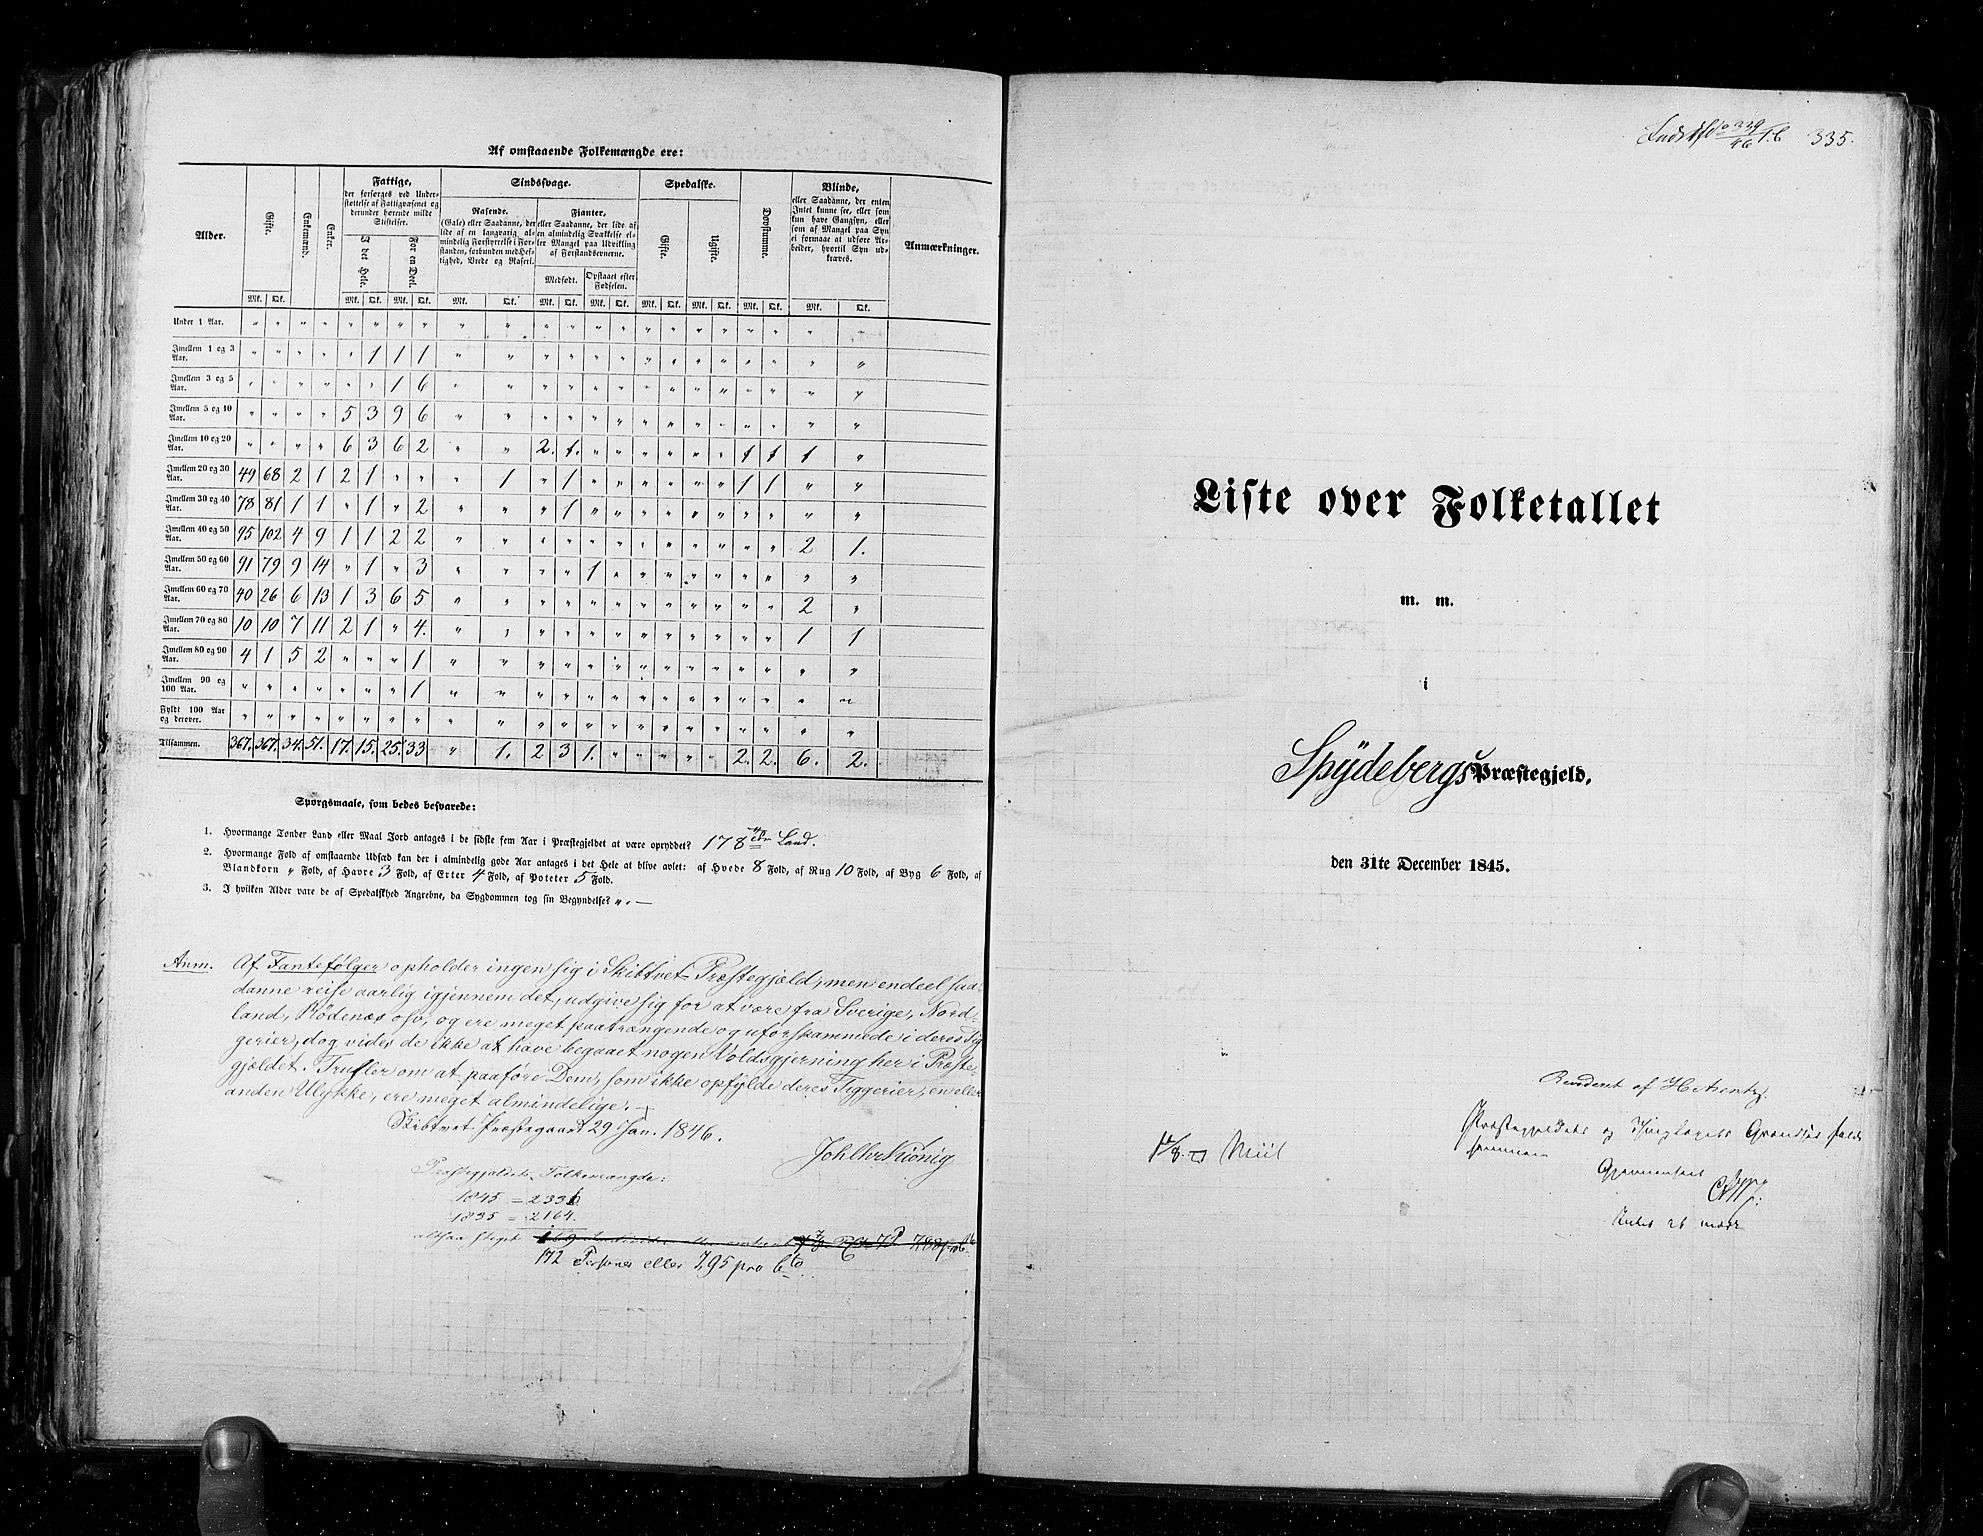 RA, Folketellingen 1845, bind 2: Smålenenes amt og Akershus amt, 1845, s. 335